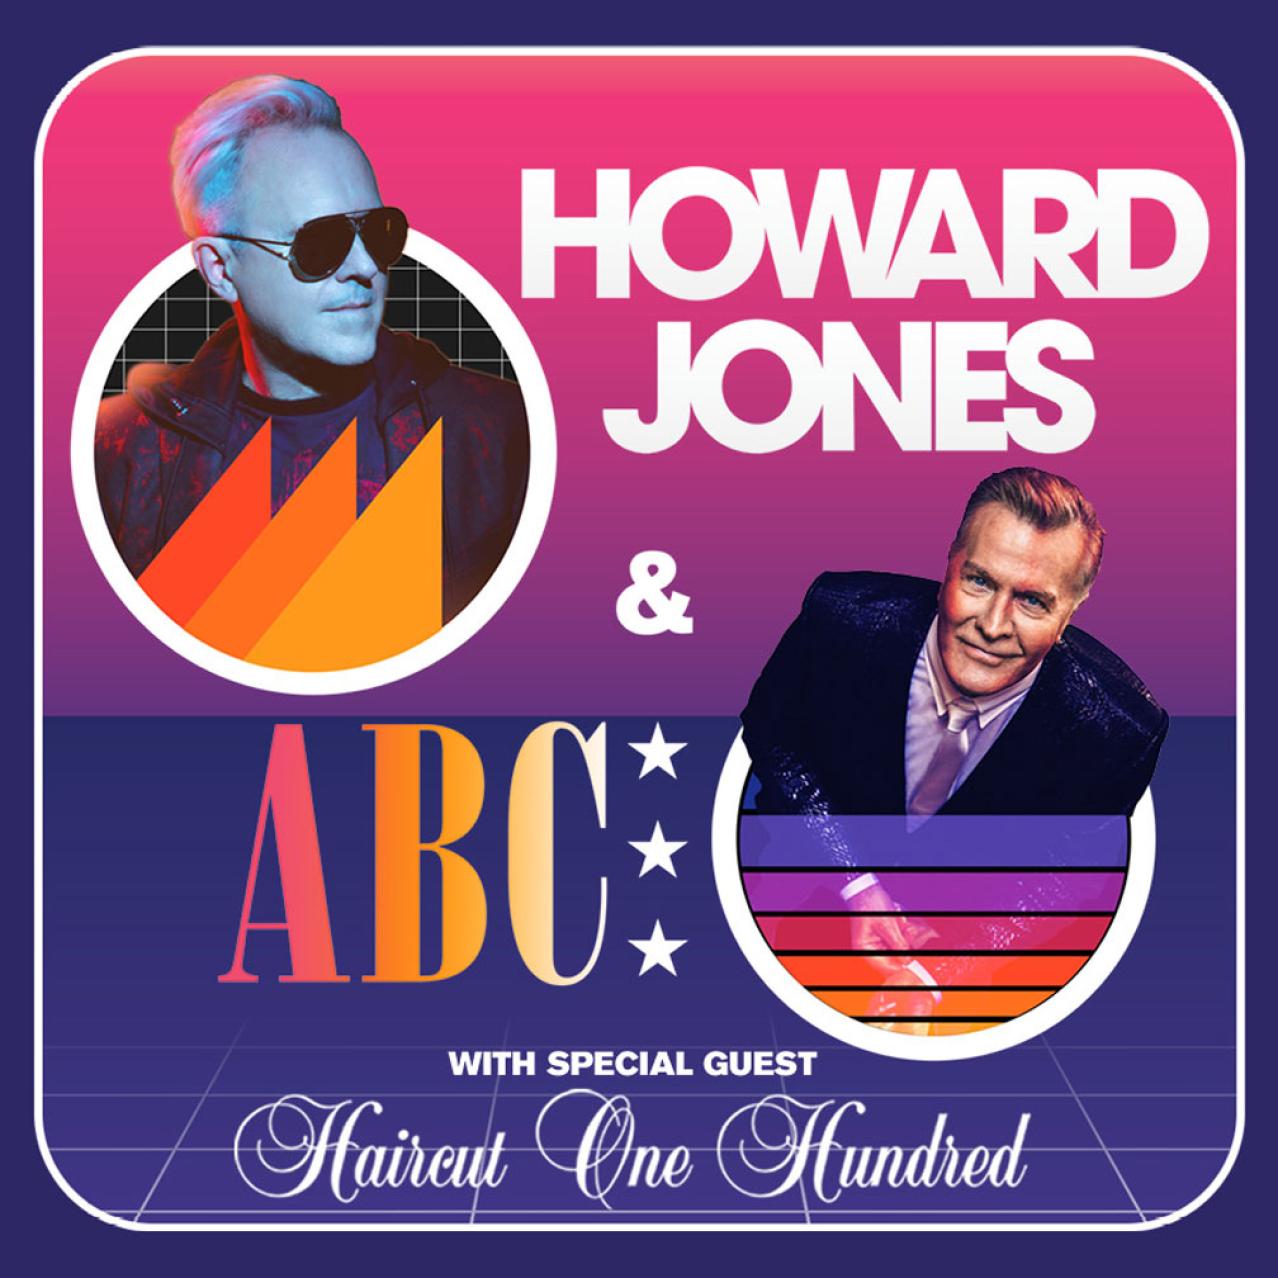 Howard Jones & ABC with Haircut One Hundred | Clifton Hill 